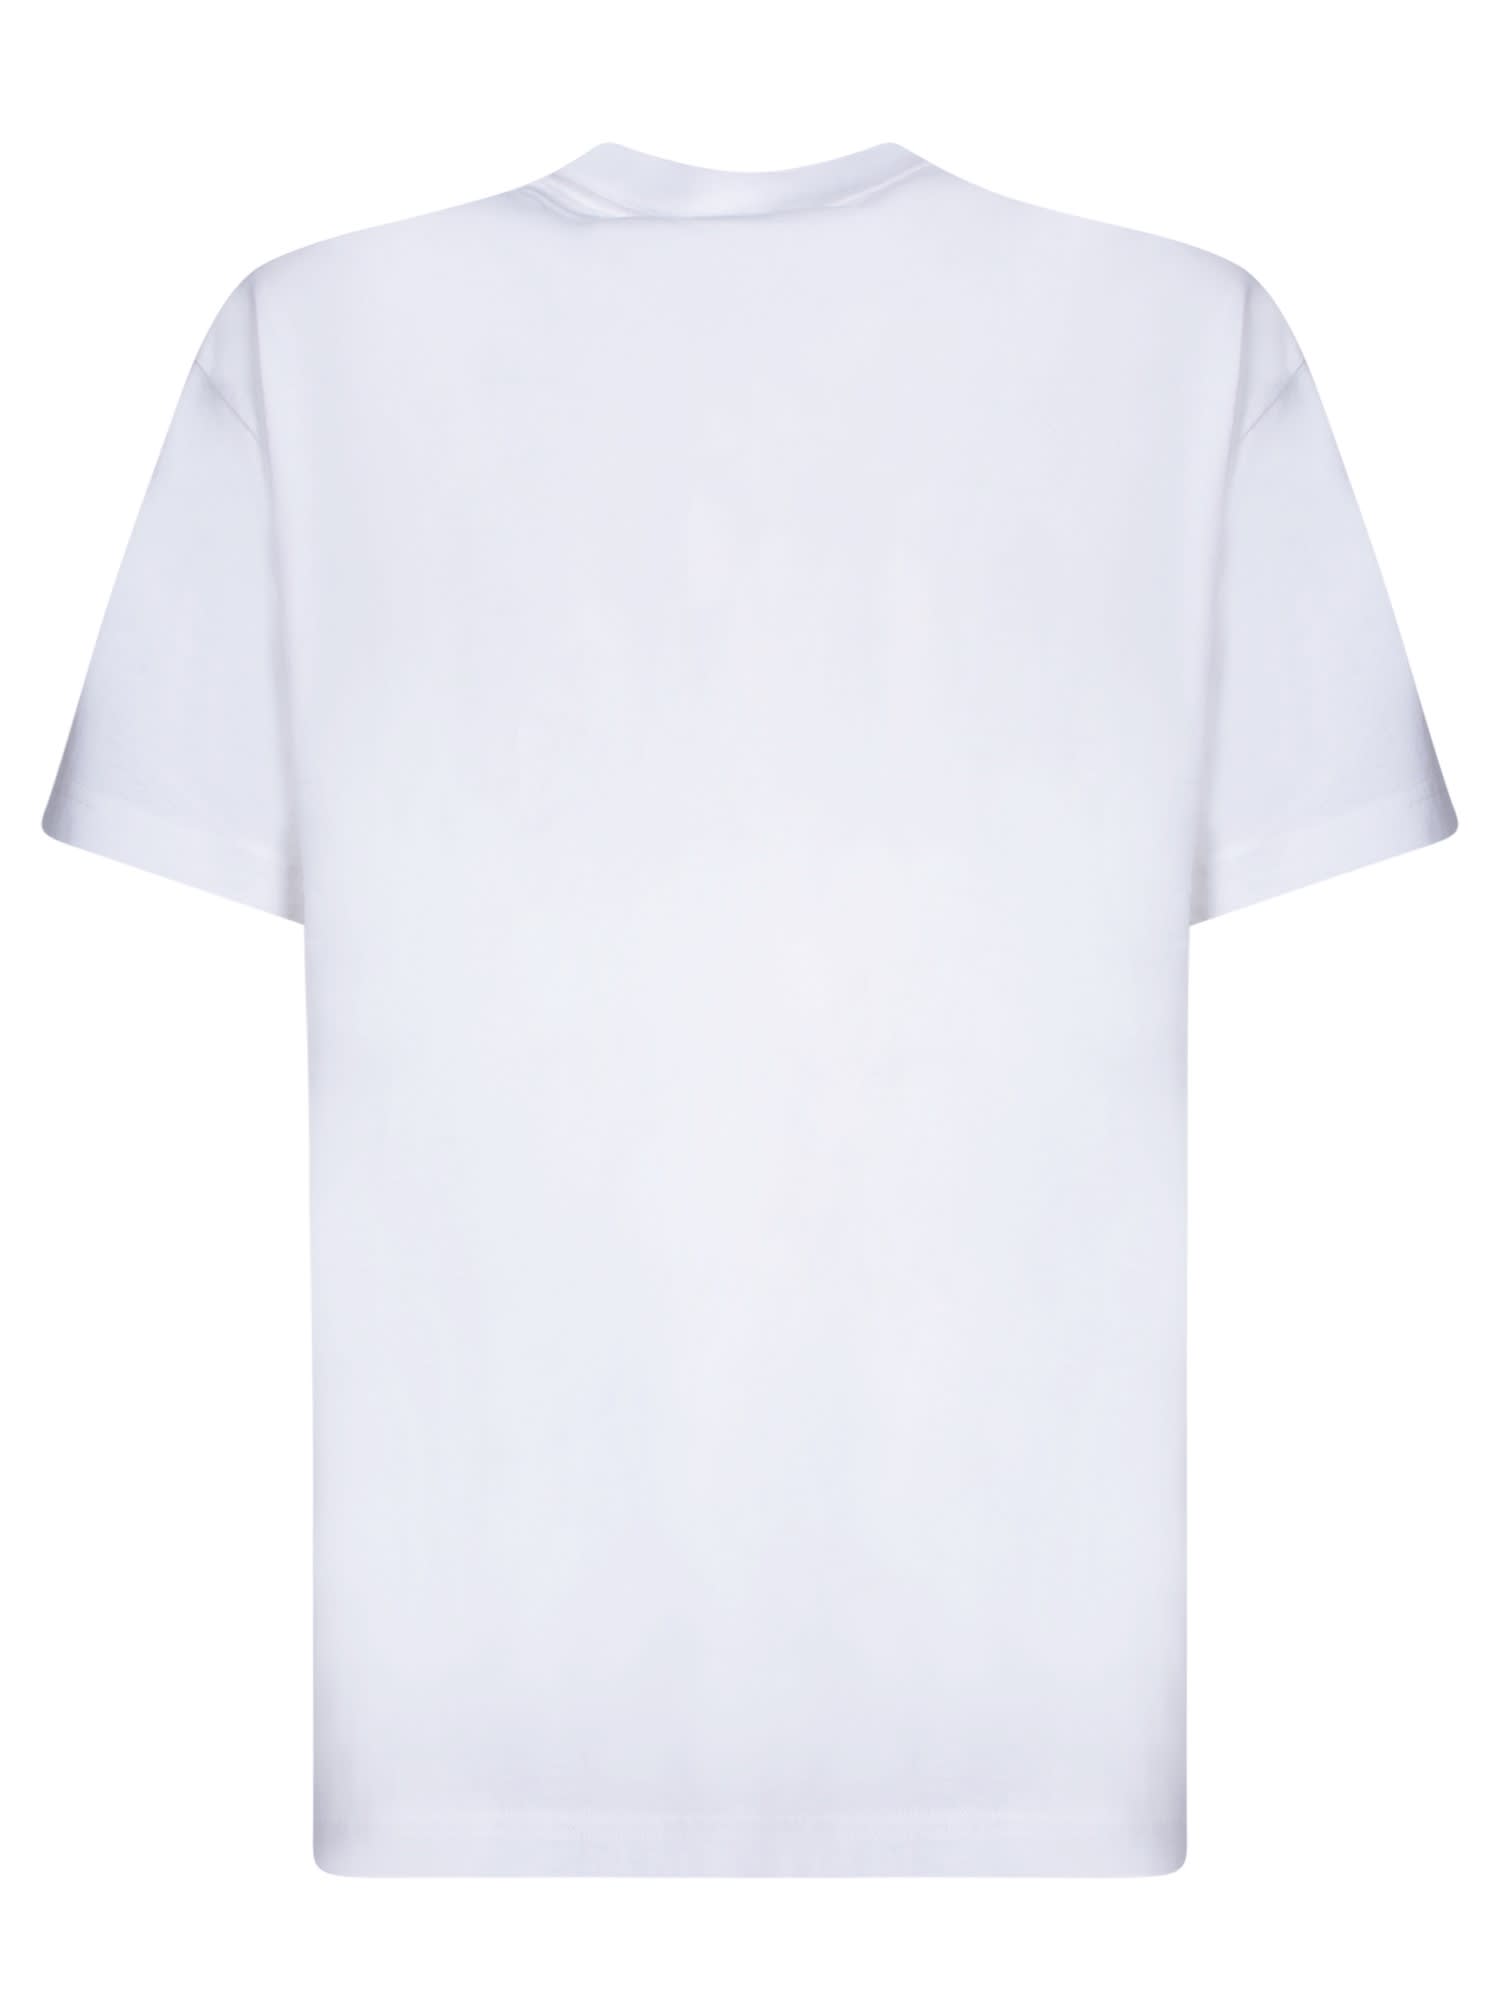 Shop Fuct Pizza White T-shirt